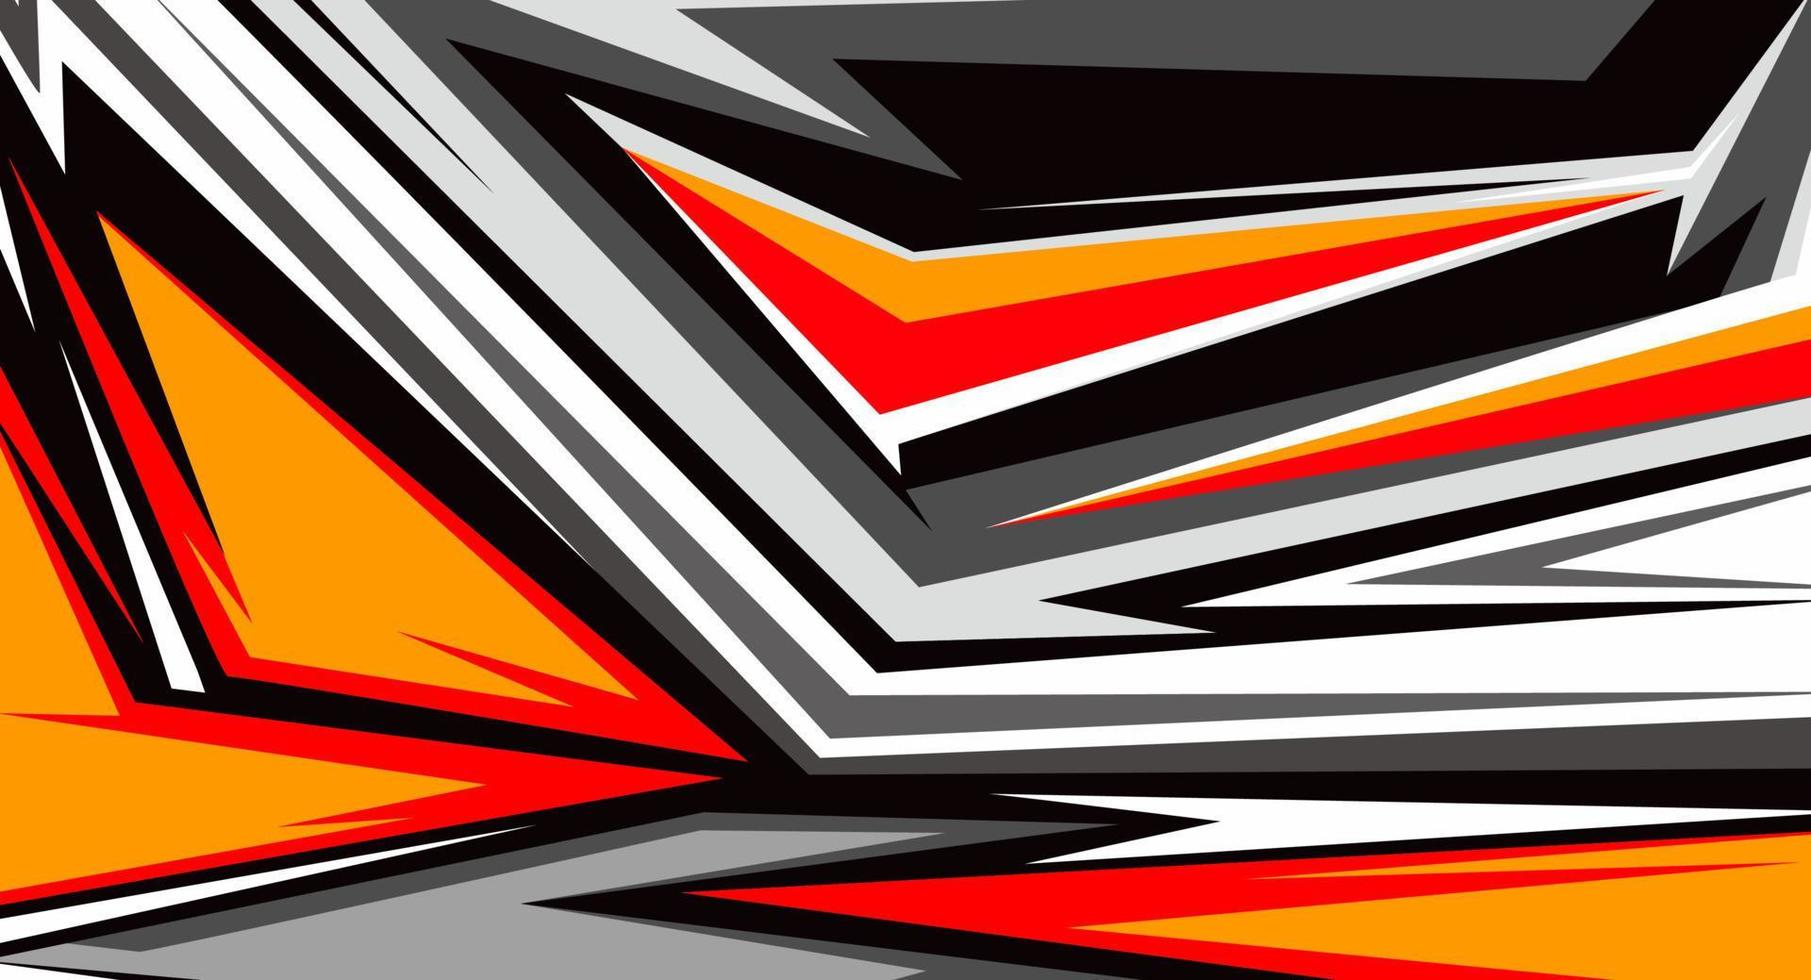 racing striping orange background free vector